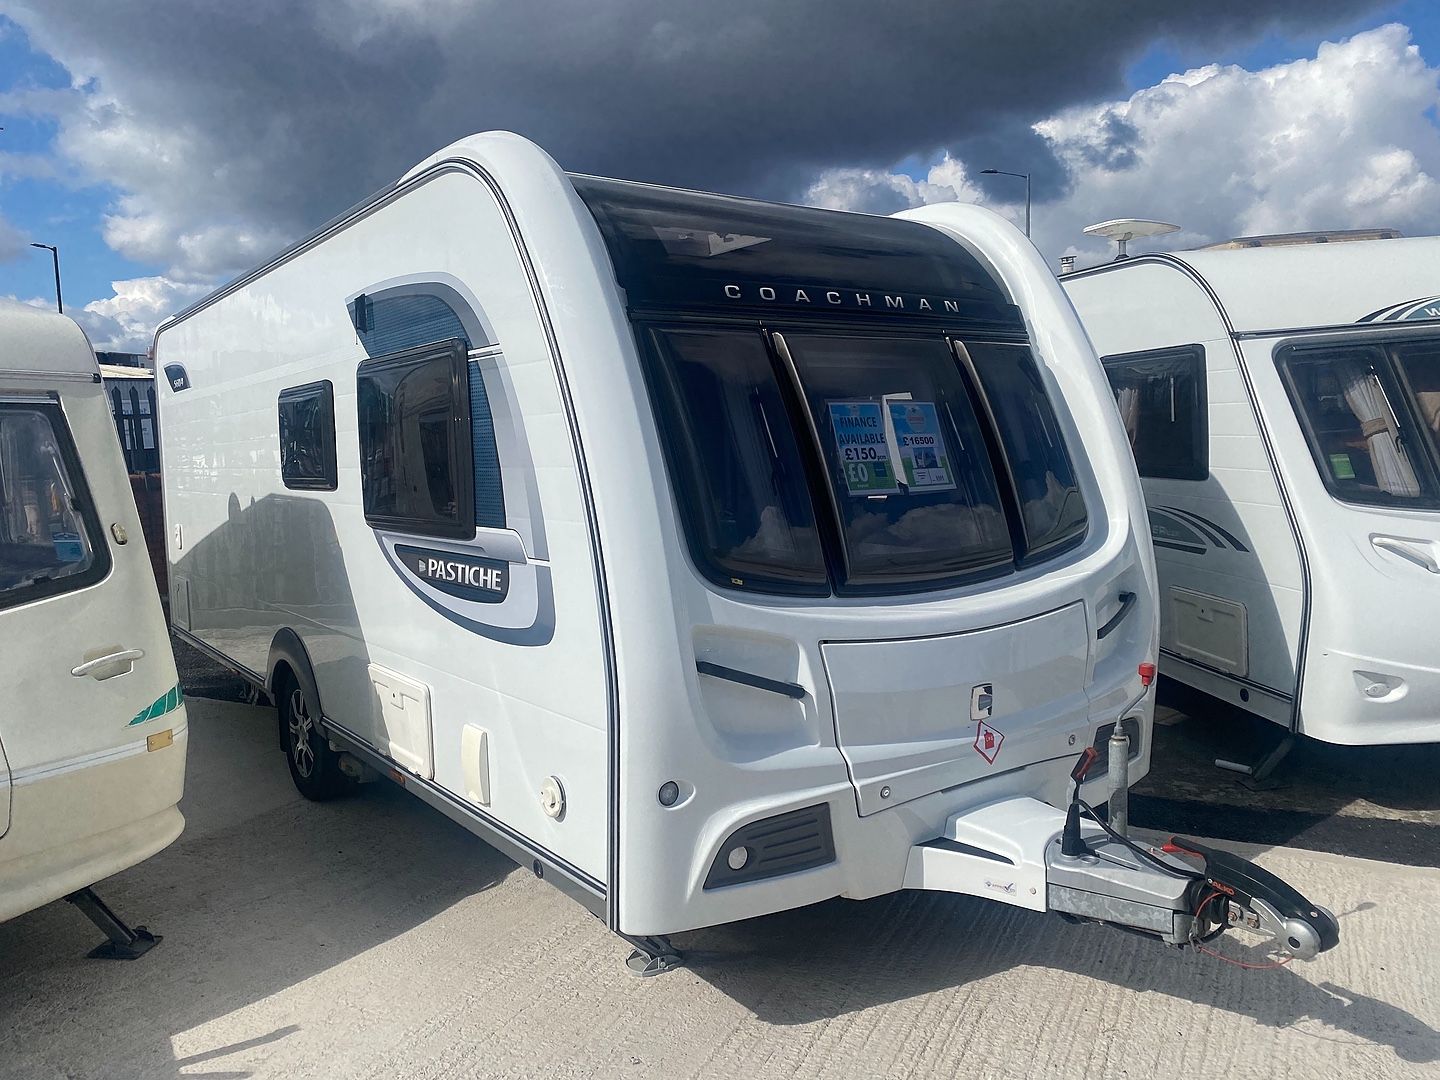 CoachmanPasticheTouring Caravan for sale